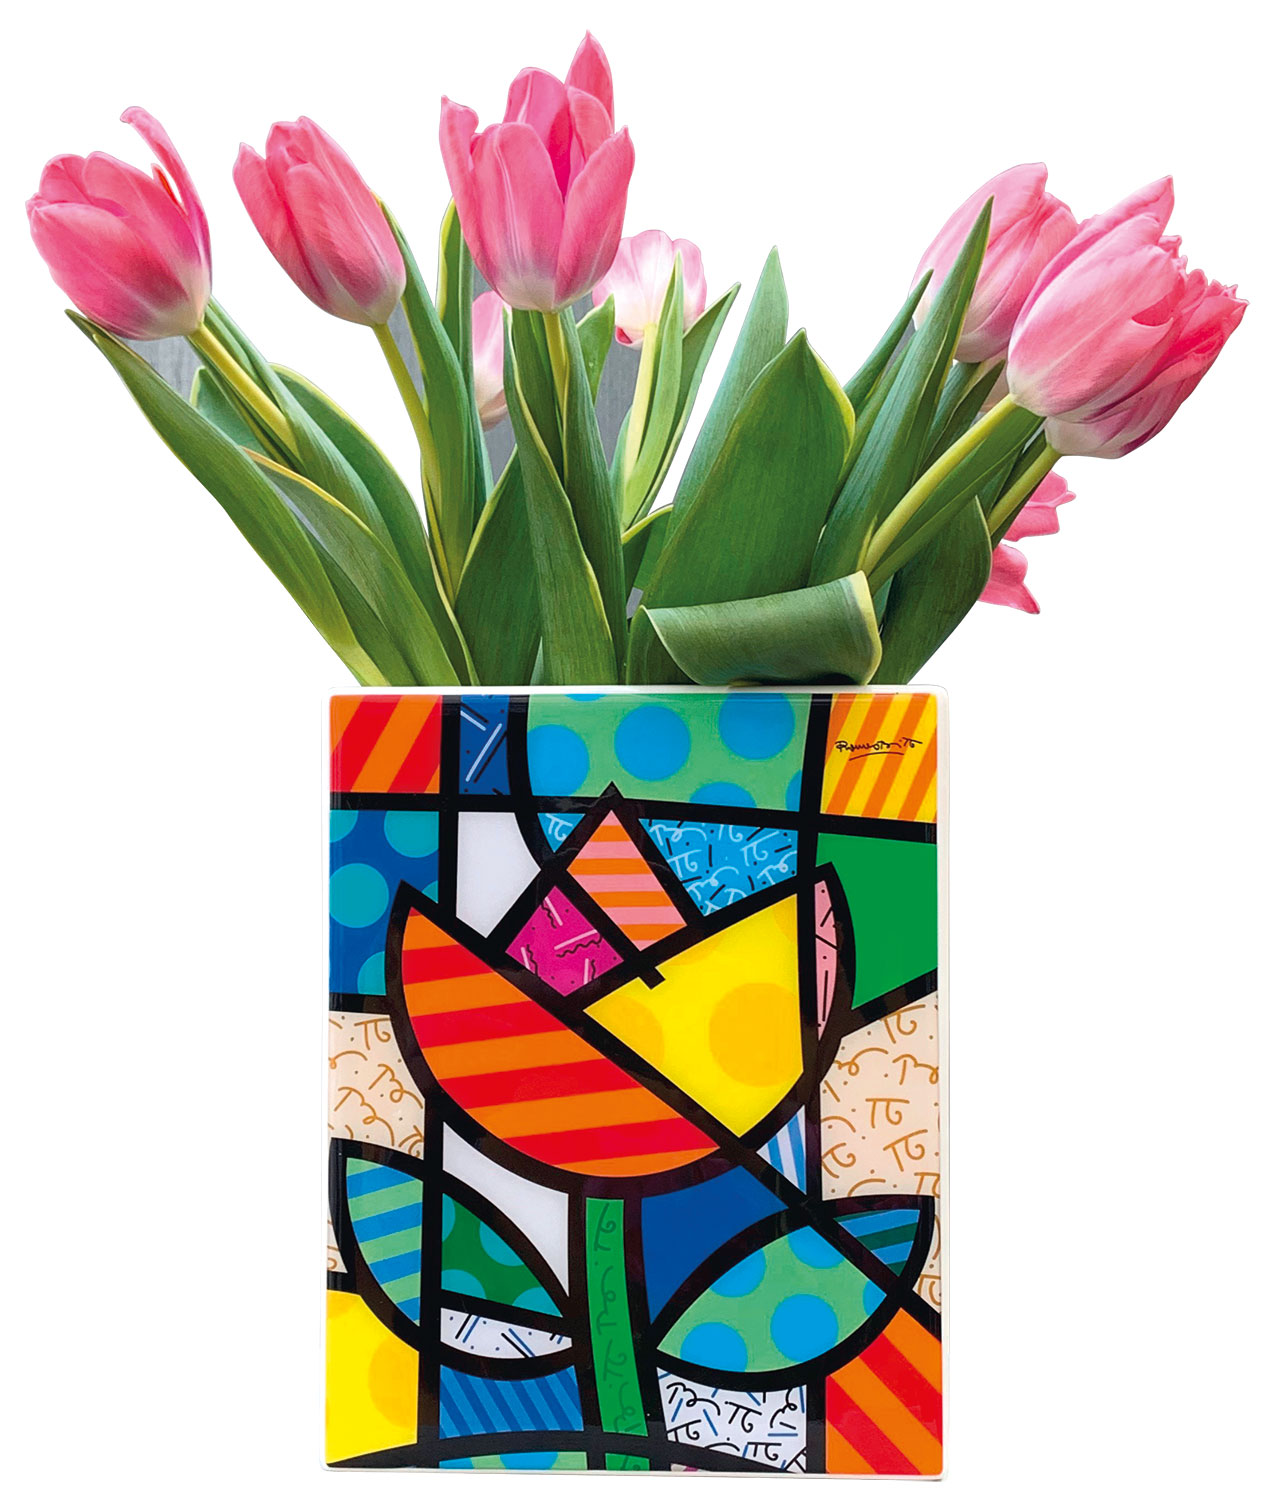 Keramikvase "Tulip" (ohne Inhalt)